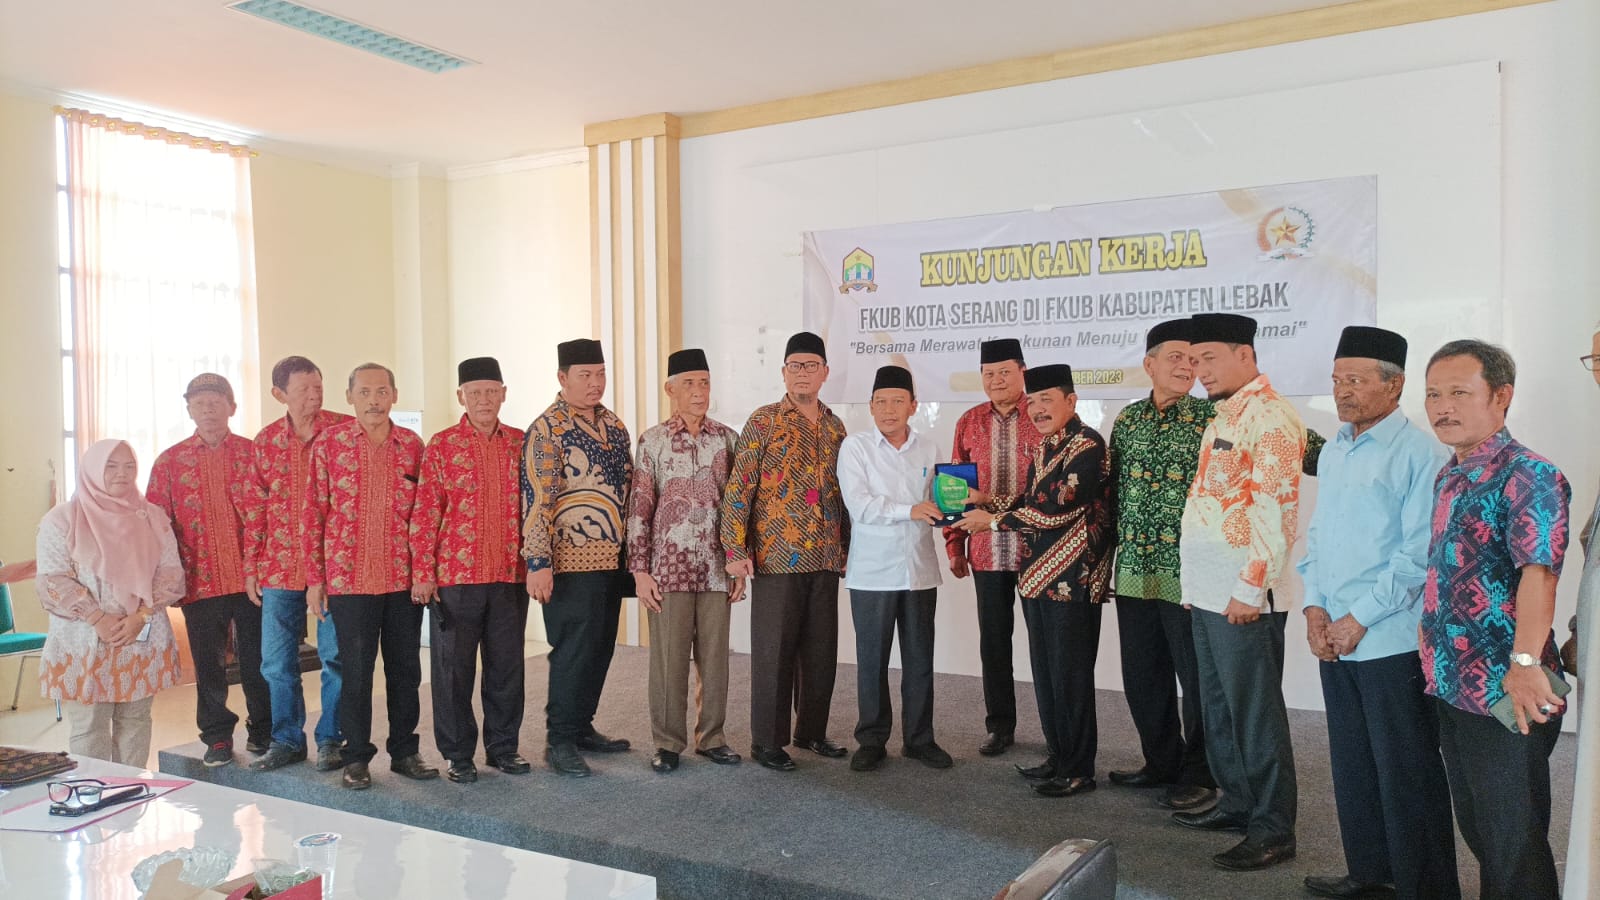 Kunjungan Kerja Ke Kantor Kemenag Lebak, Ketua FKUB Kota Serang KH. Ammas Tajuddin: Perkuat Kerukunan Indonesia Damai Dipemilu 2024